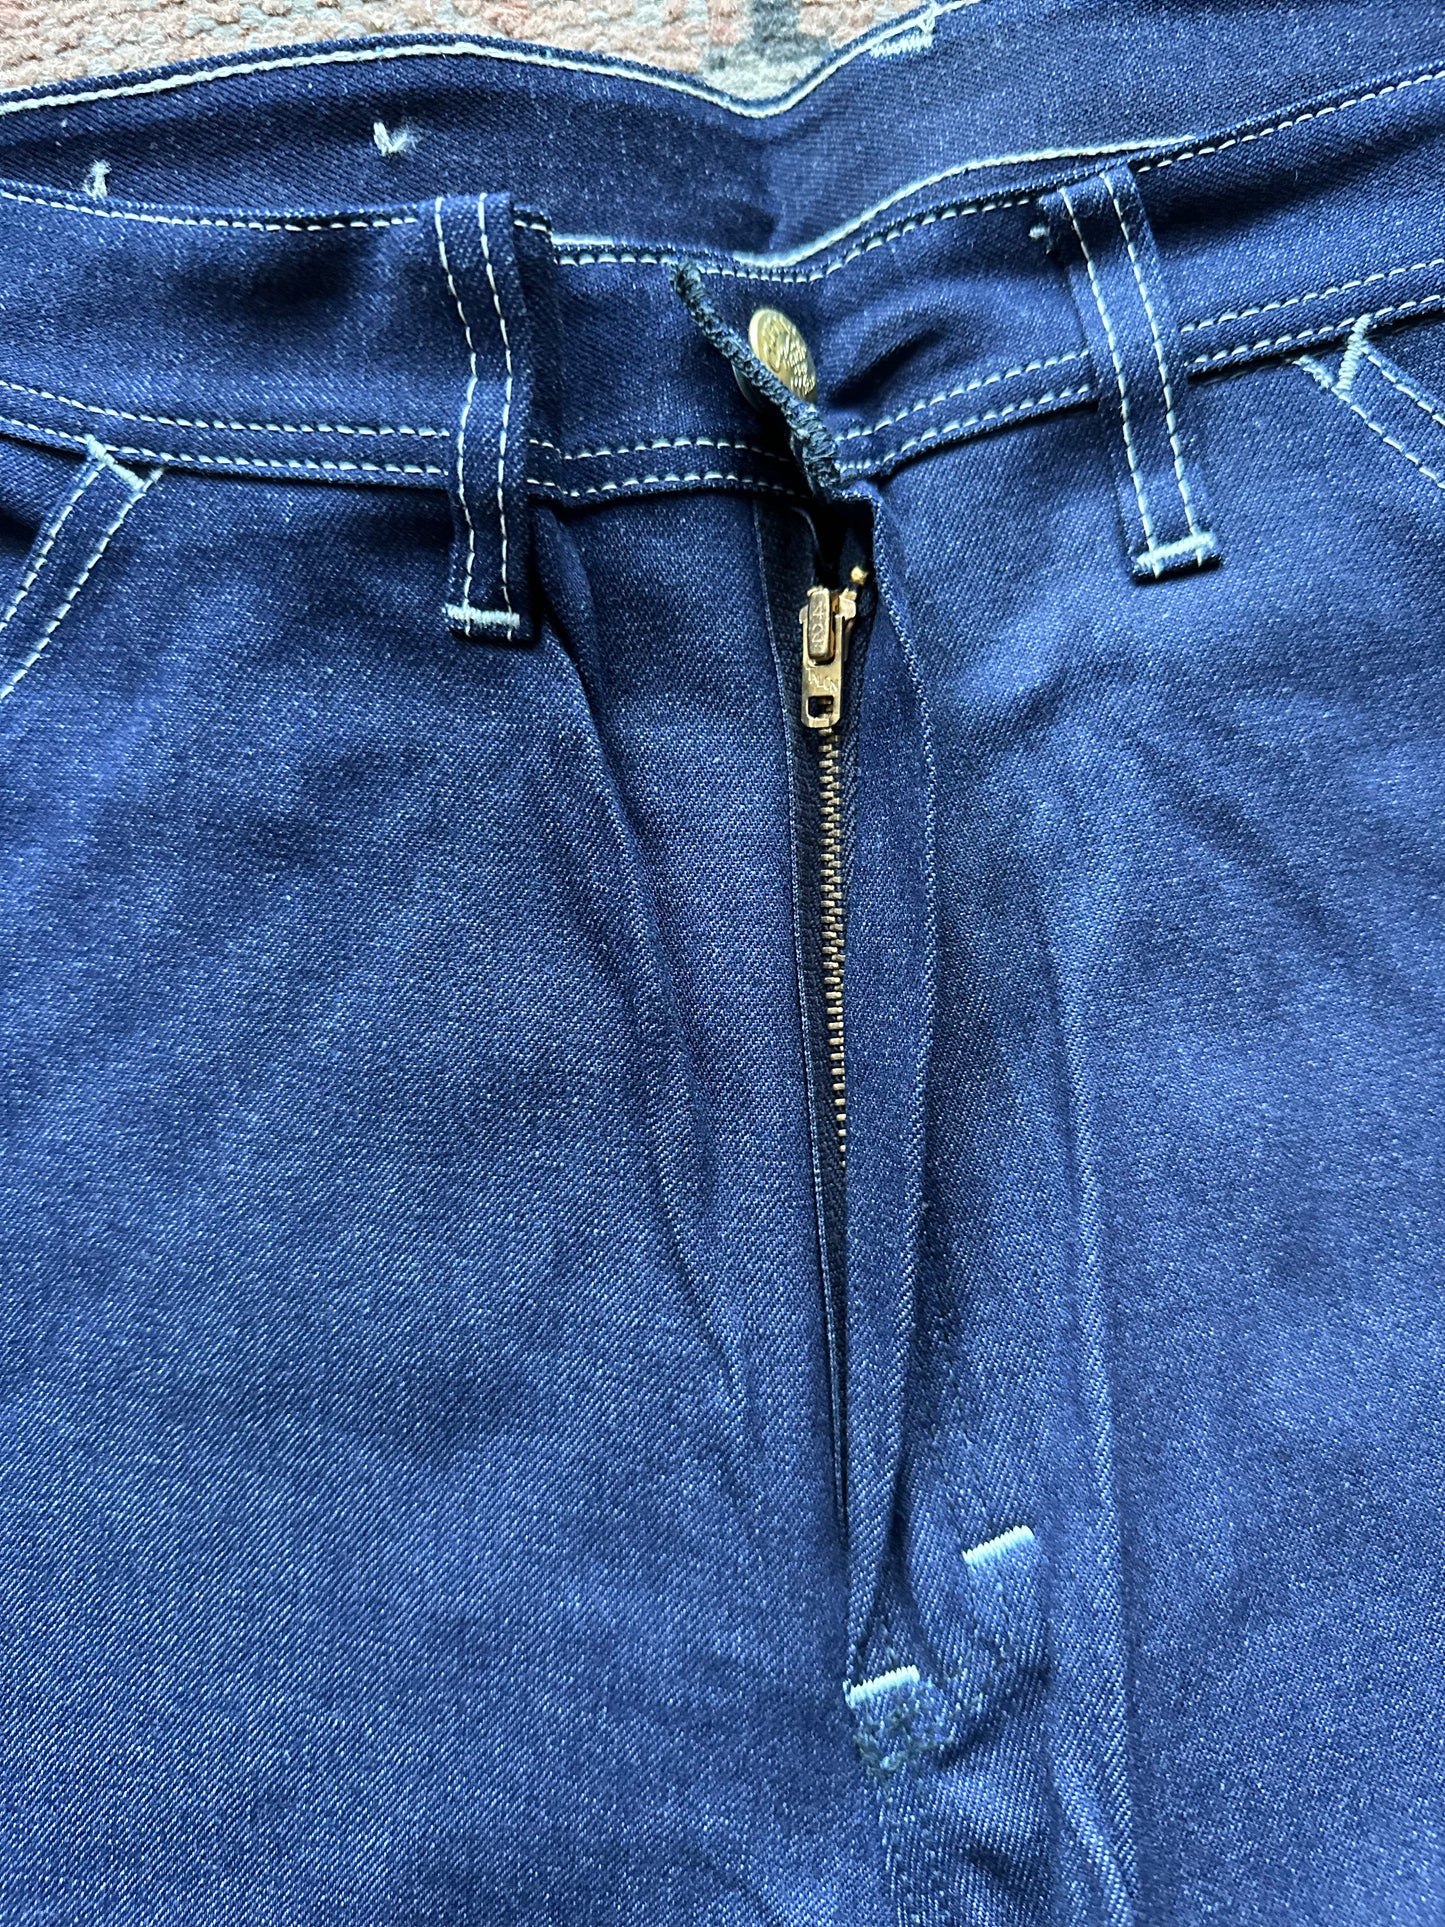 NOS Vintage Carter's Carpenter Jeans W28 L32